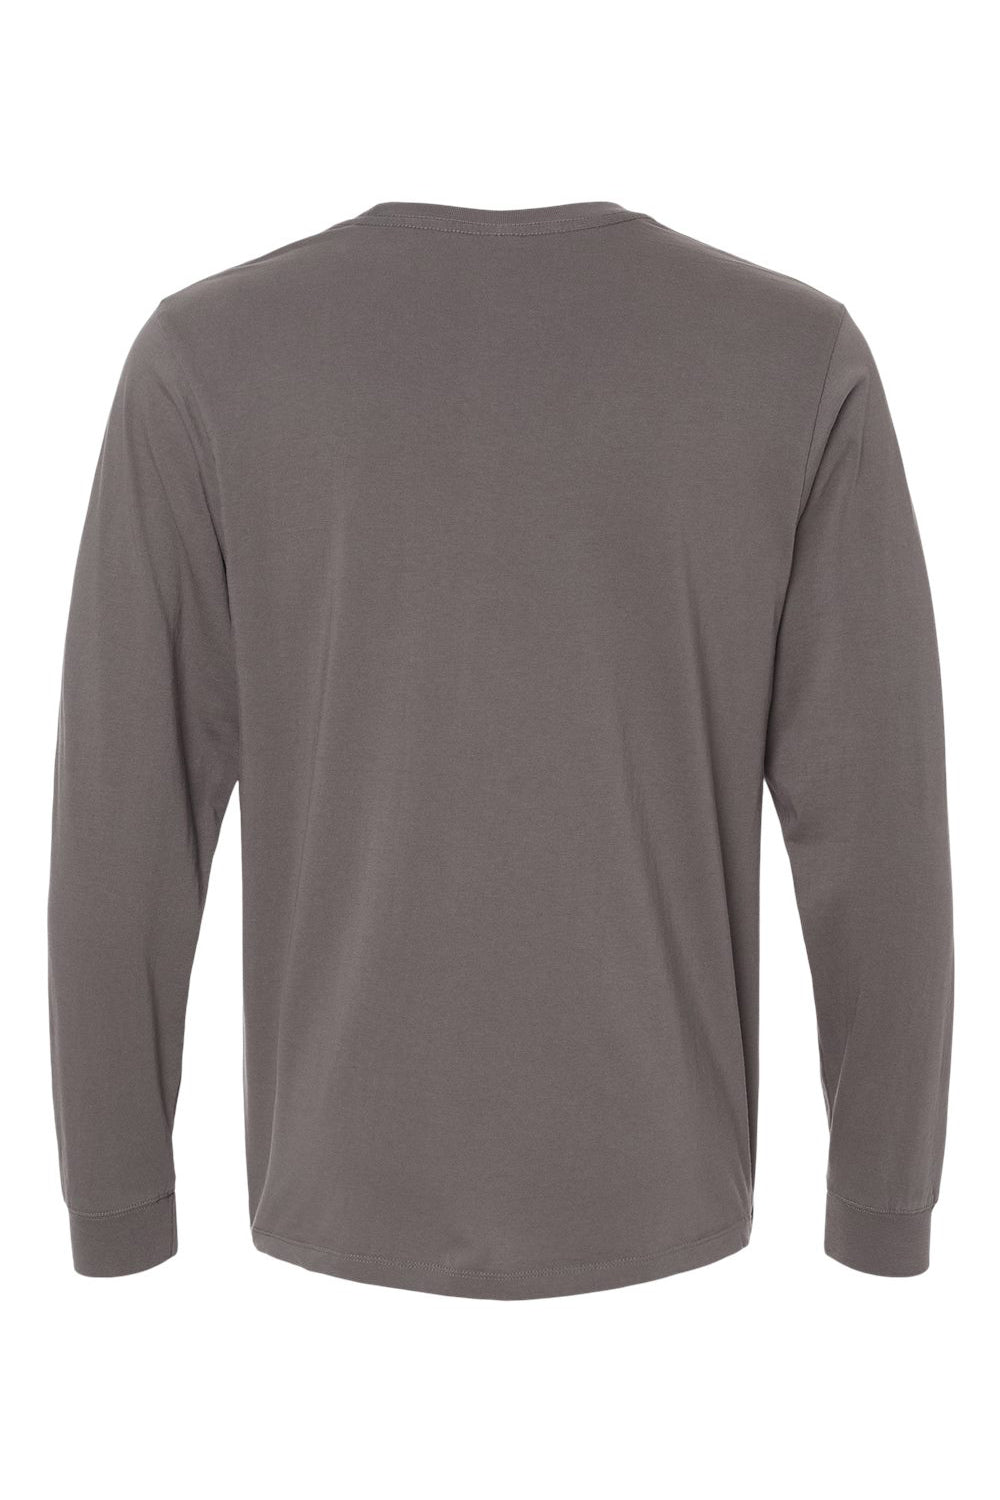 SoftShirts 420 Mens Organic Long Sleeve Crewneck T-Shirt Graphite Grey Flat Back